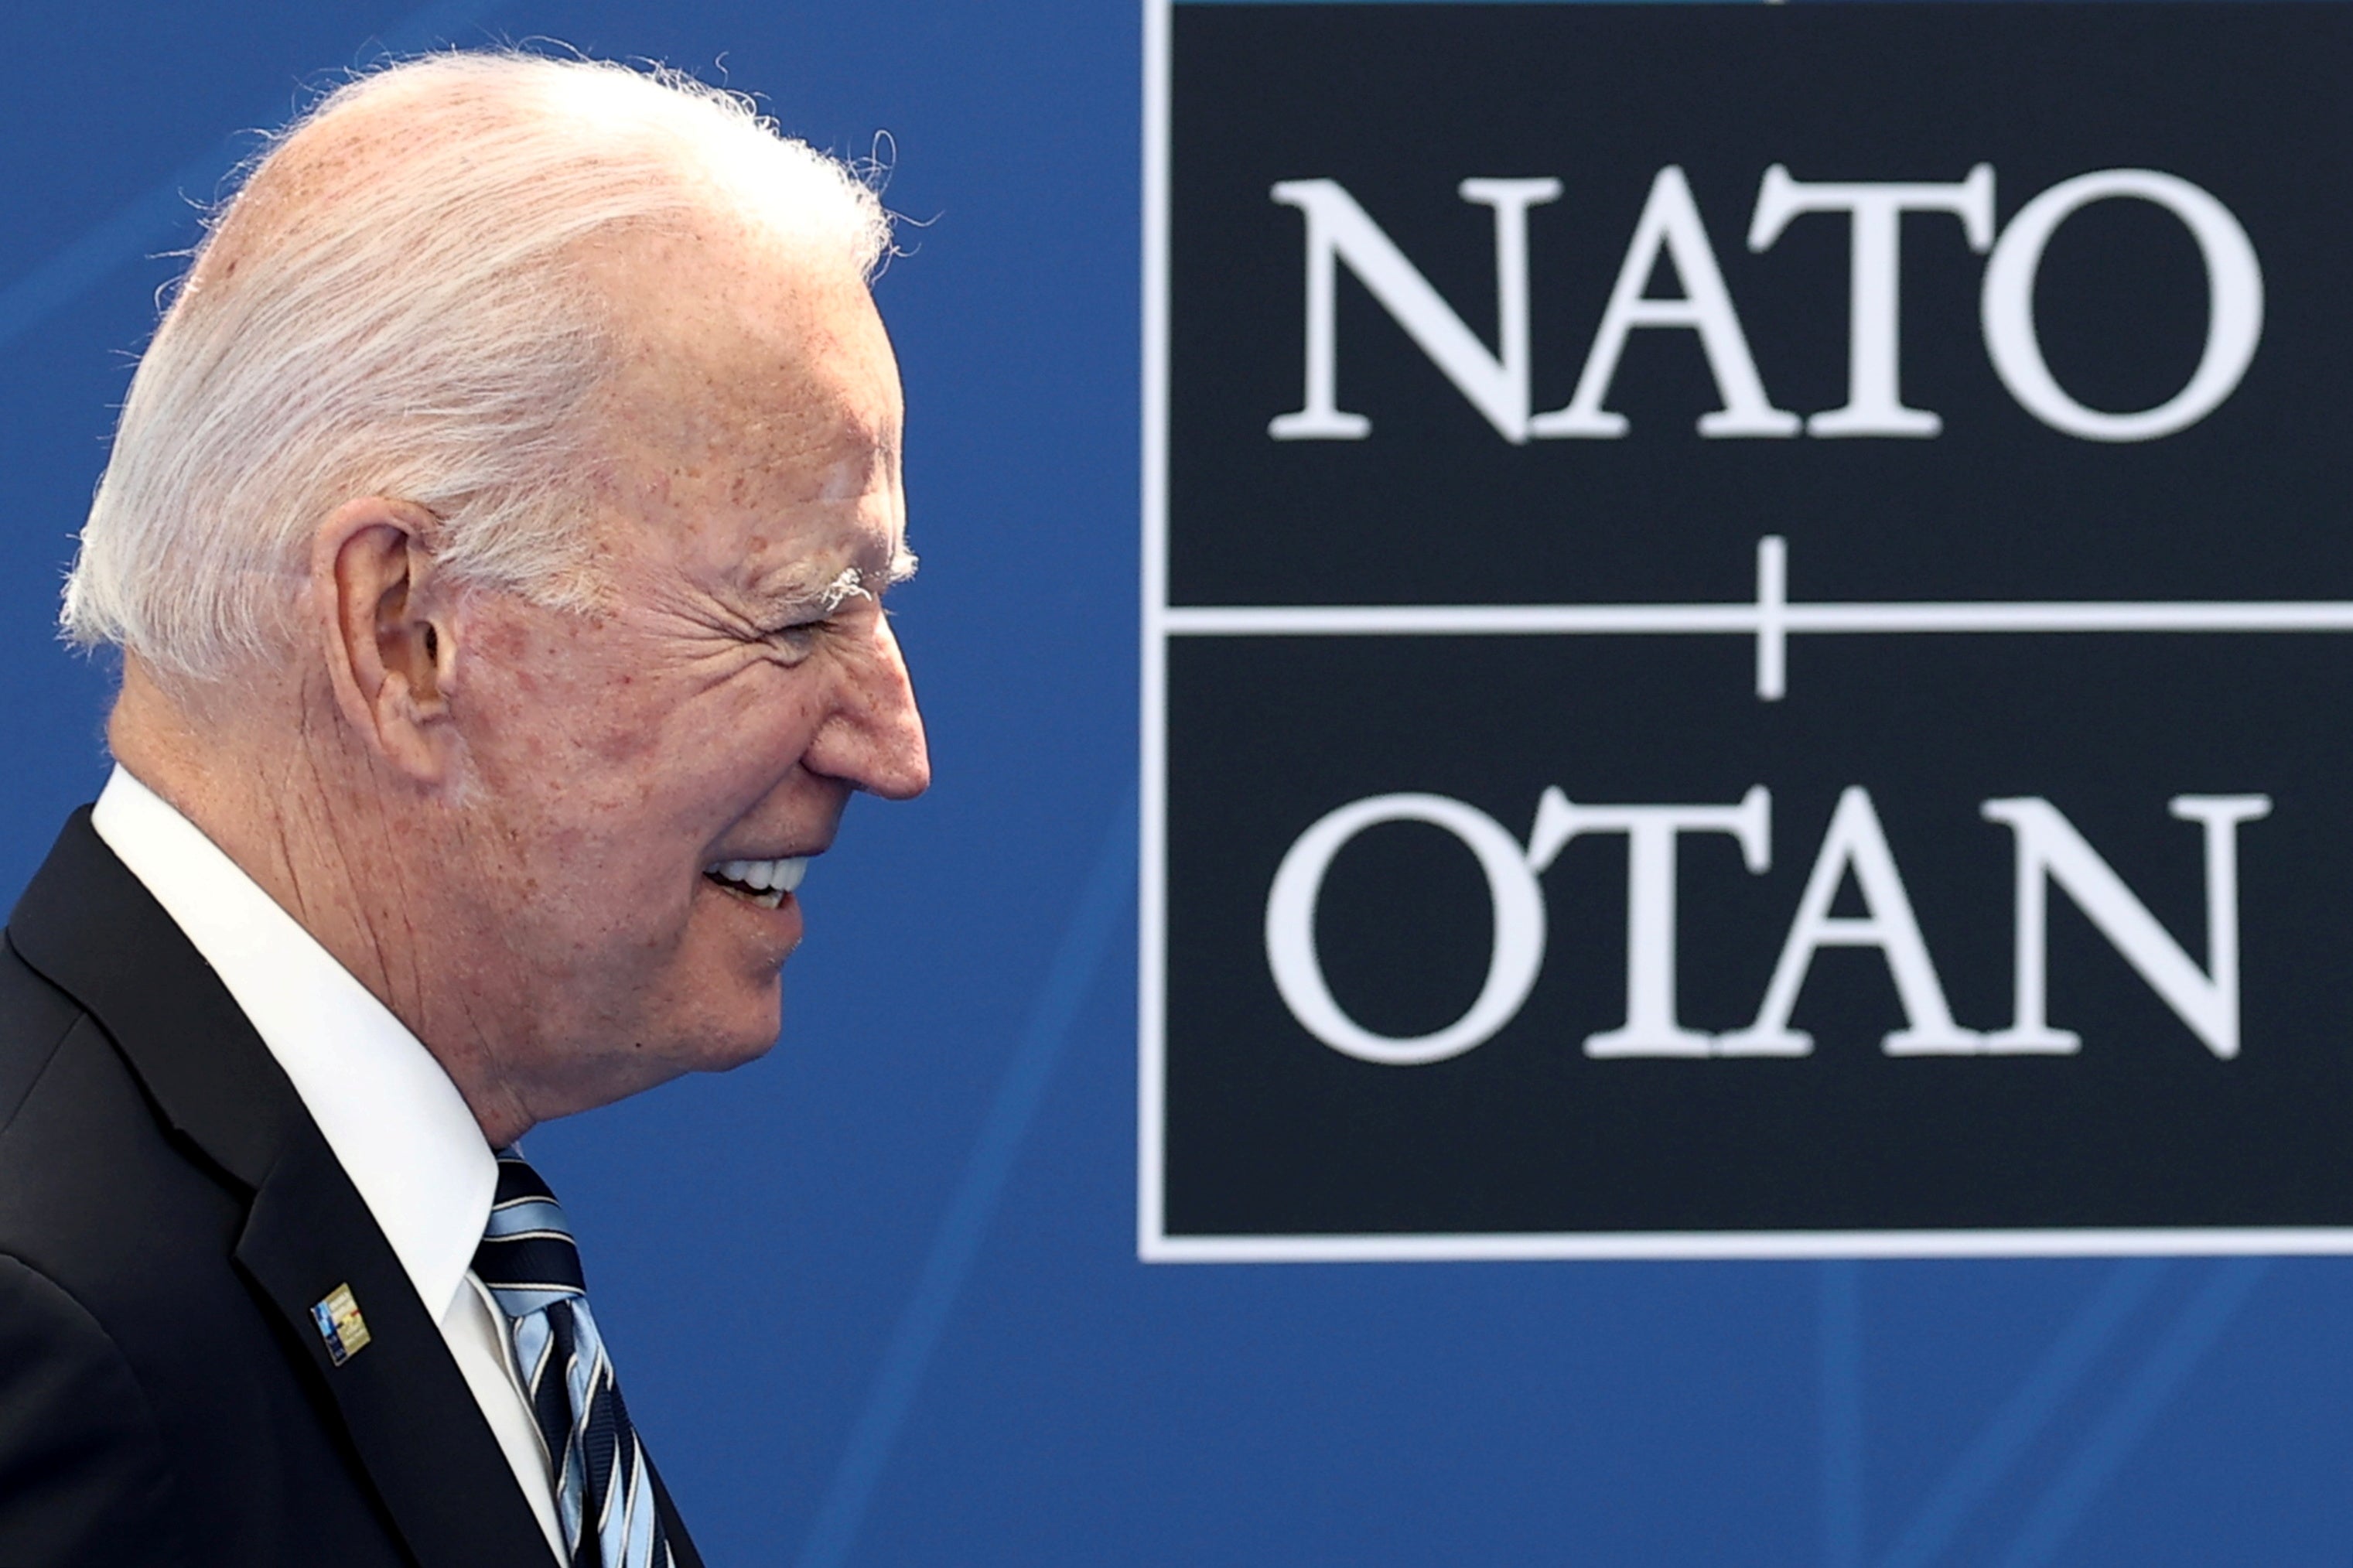 US president Joe Biden arrives at the Nato summit in Brussels